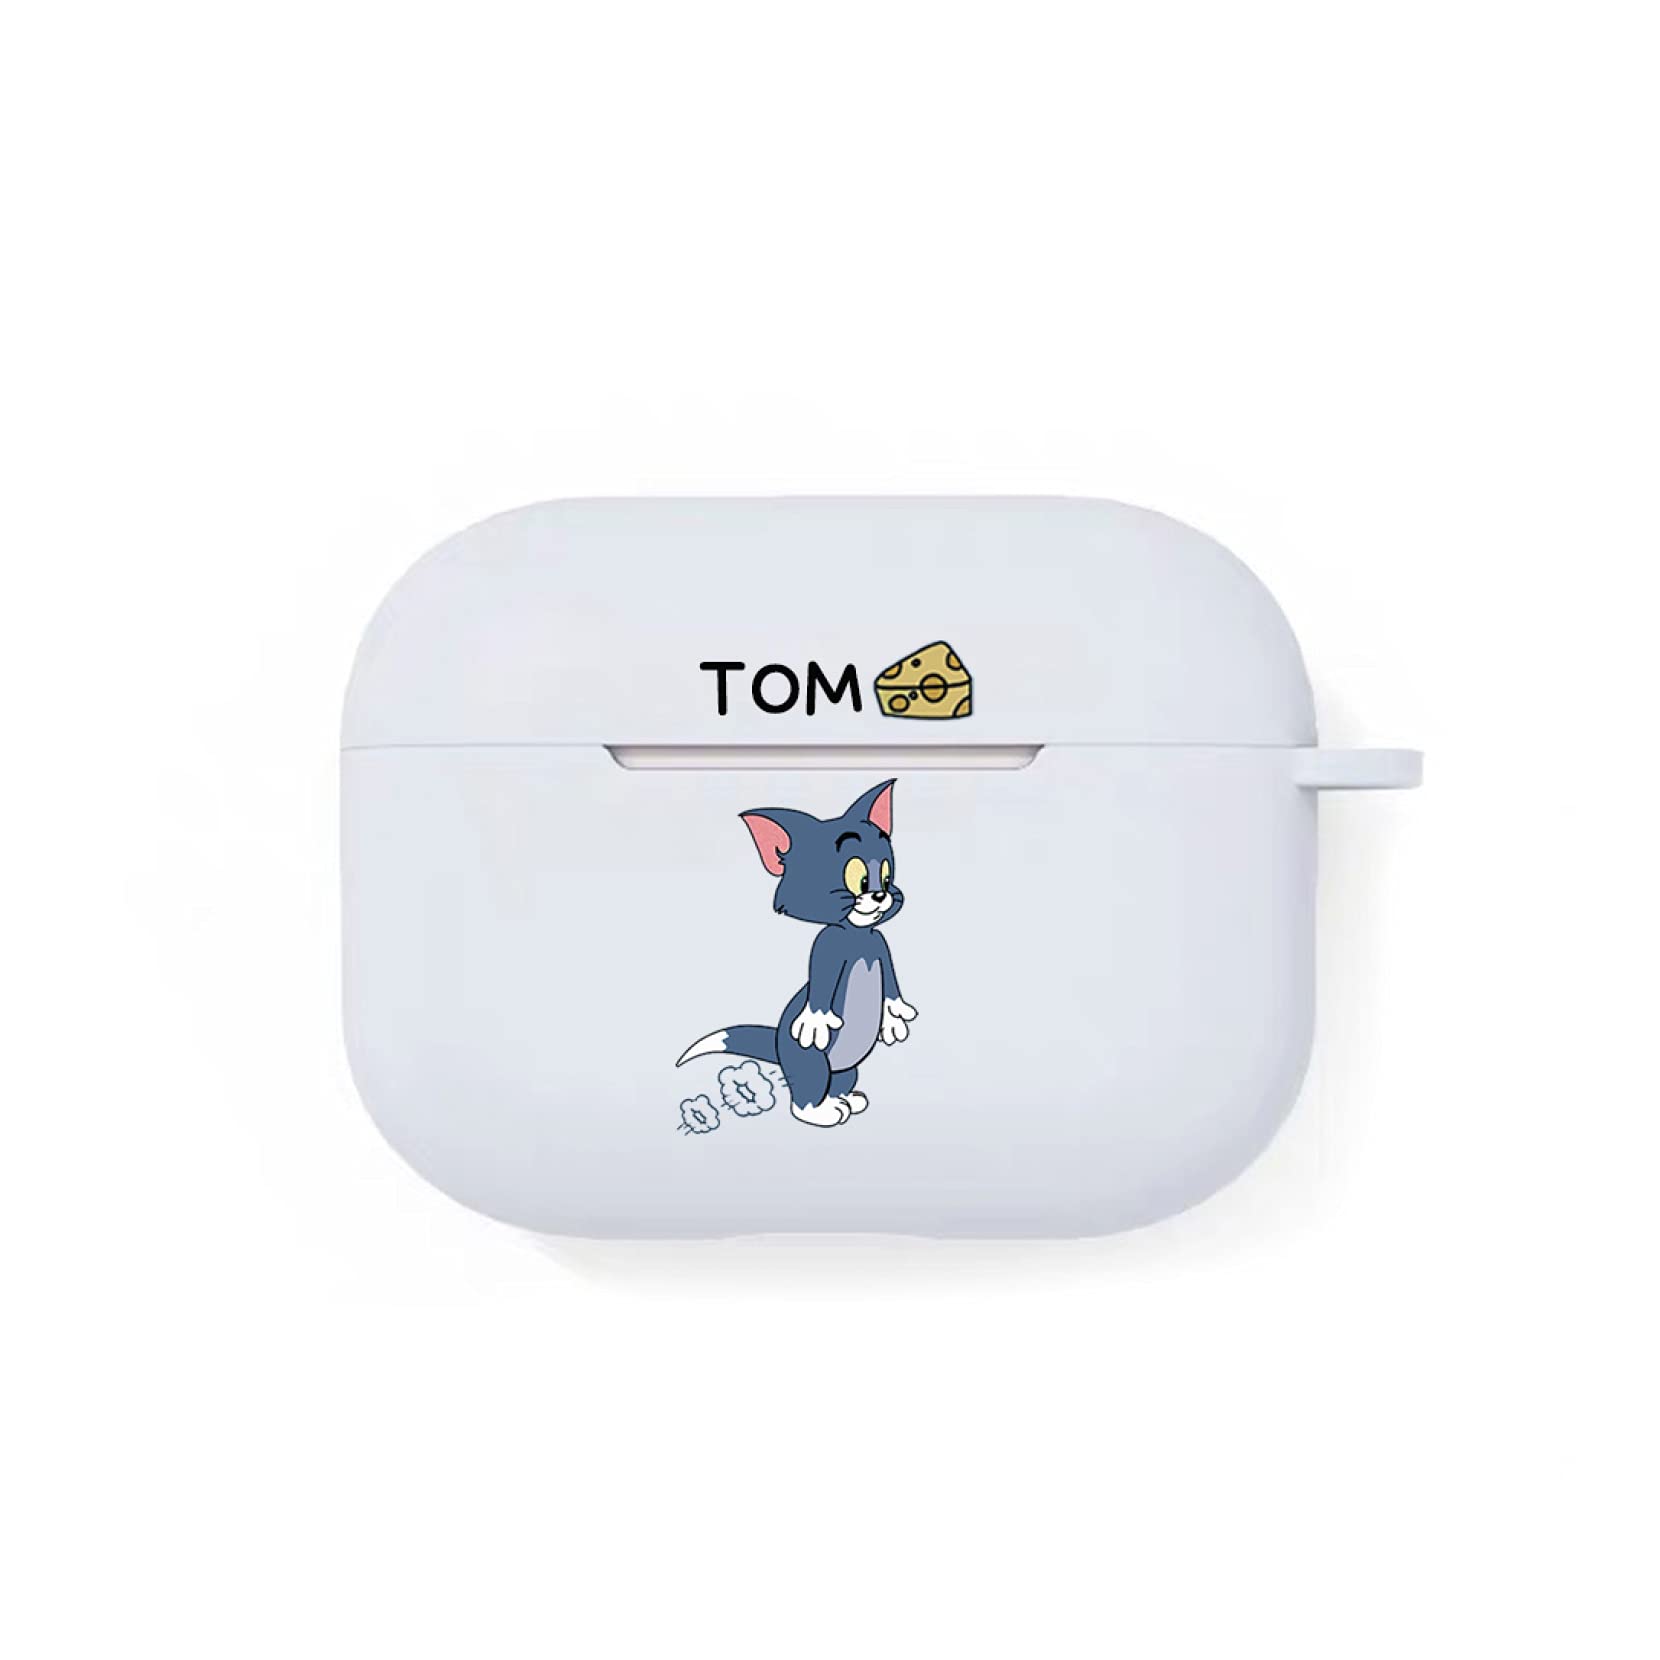 AirPodsケースカバー Tom and Jerry AirPods Pro かわいい エアーポッズ トムとジェリー ケースカバー おしゃれ イヤホンケース 保護 耐